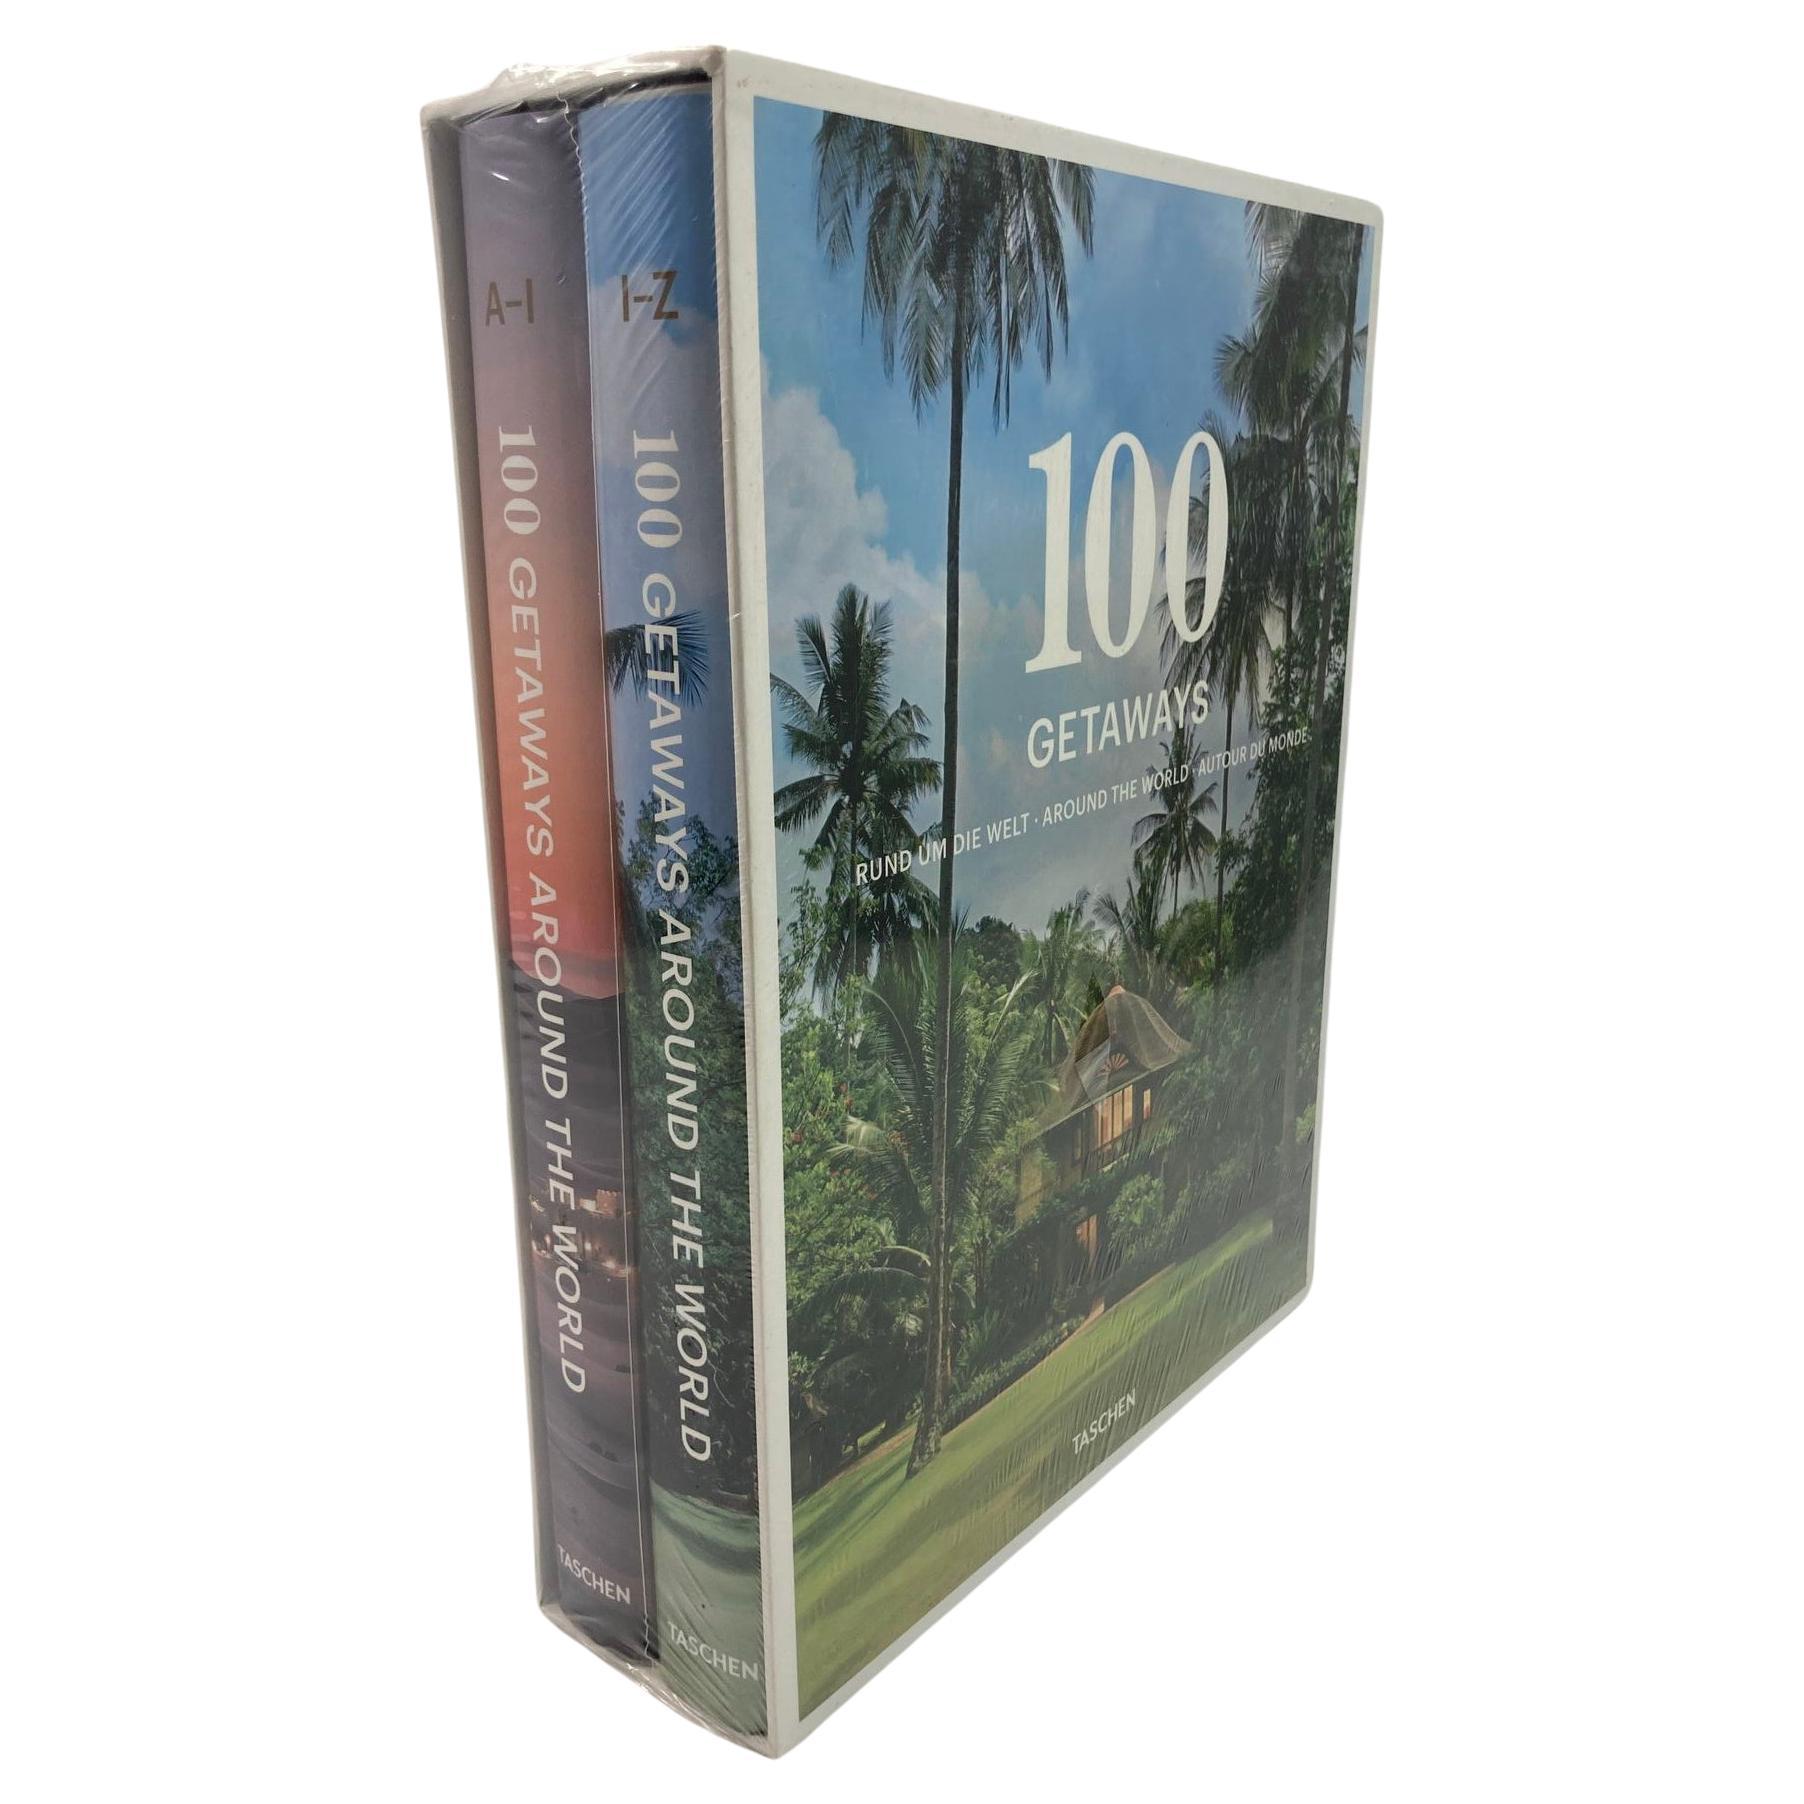 100 Getaways Around the World de Margit J. Mayer TASCHEN couverture rigide 2014 en vente